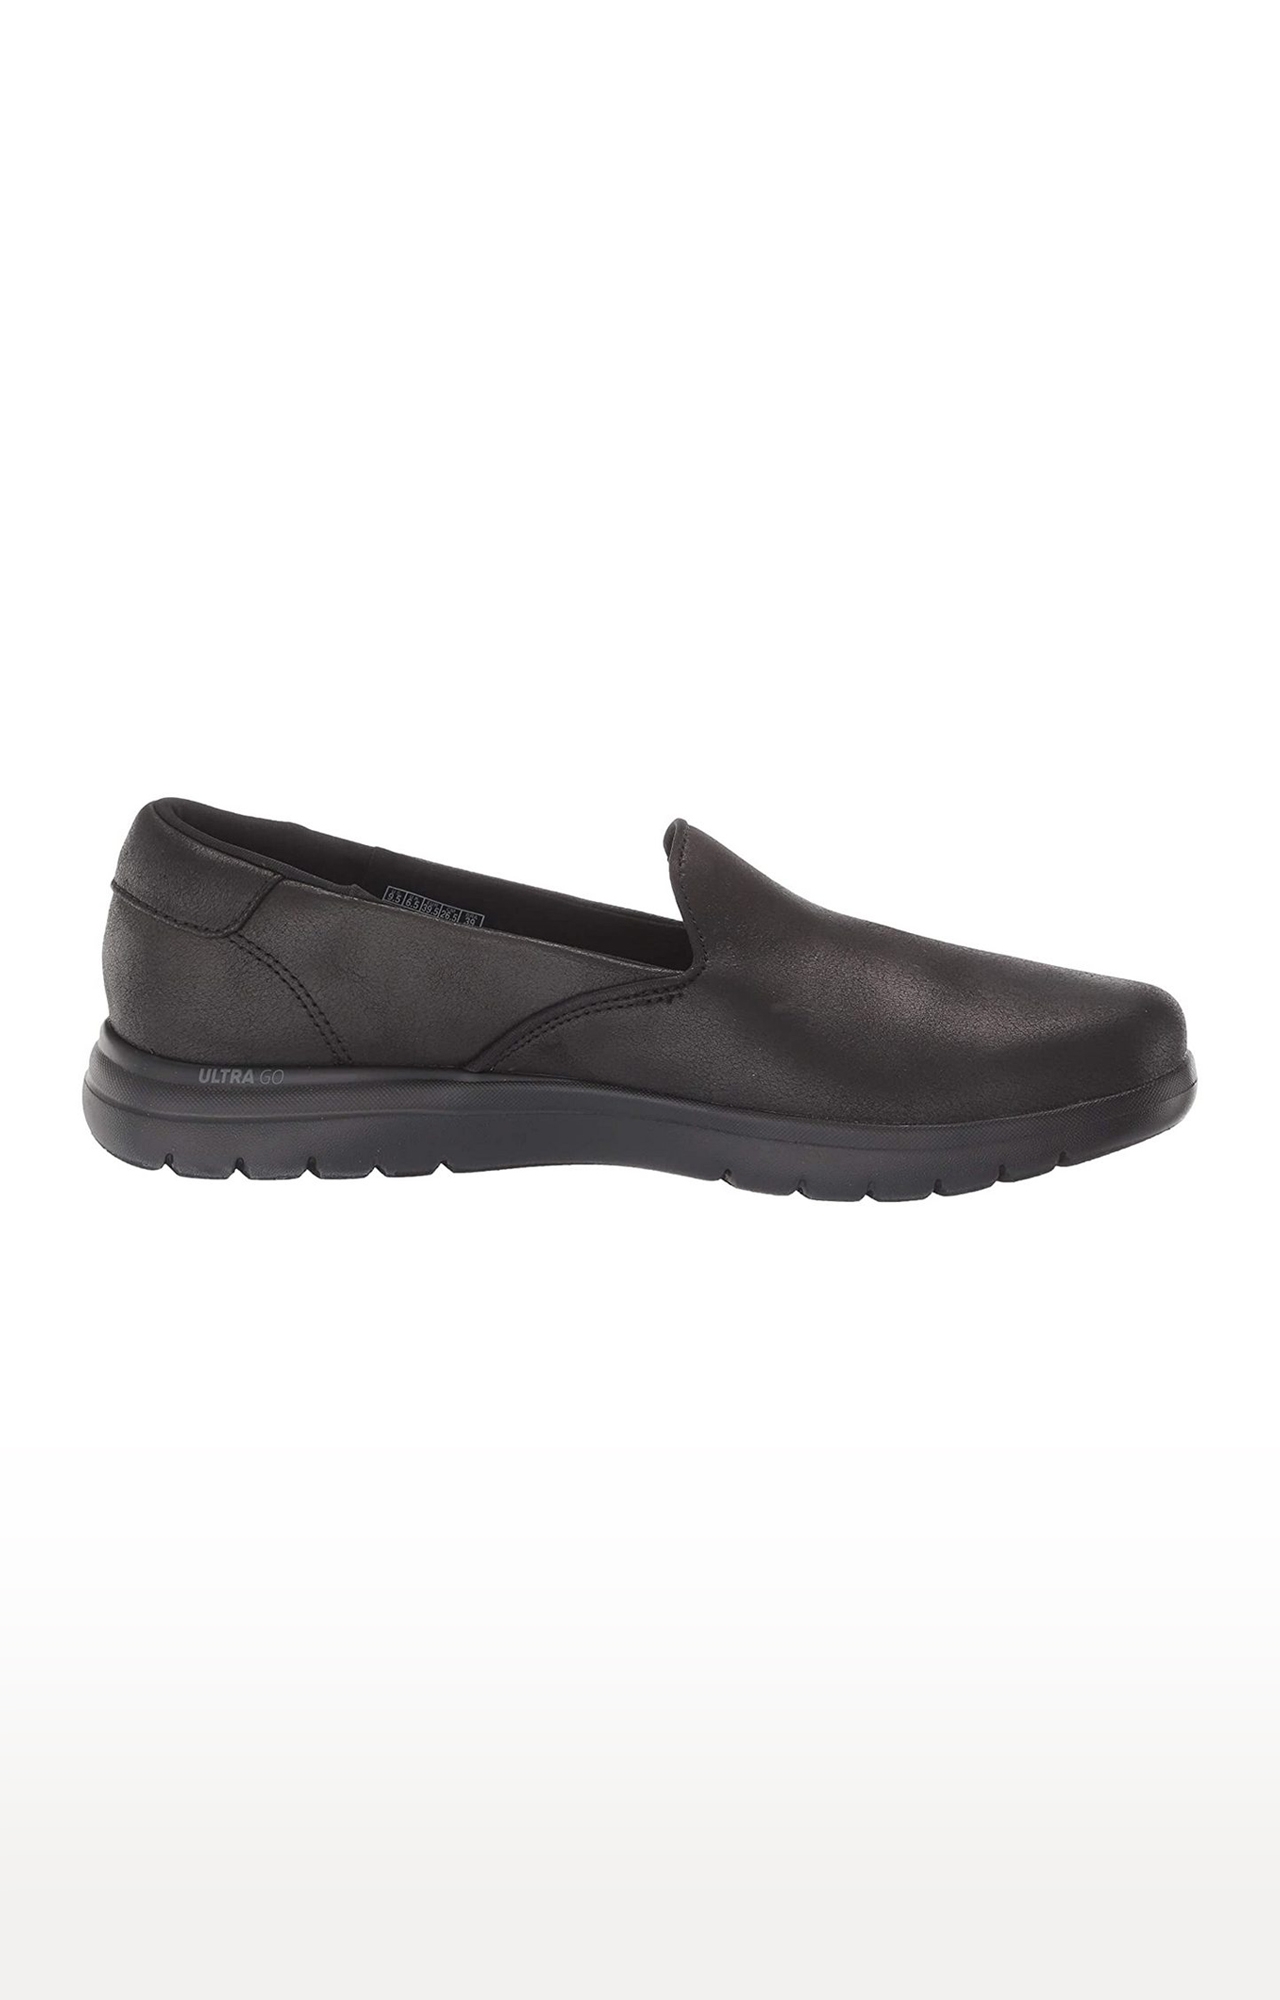 Skechers | Skechers womens ON-THE-GO FLEX LAVISH BLACK Walking Shoes - (136414-BBK) 1